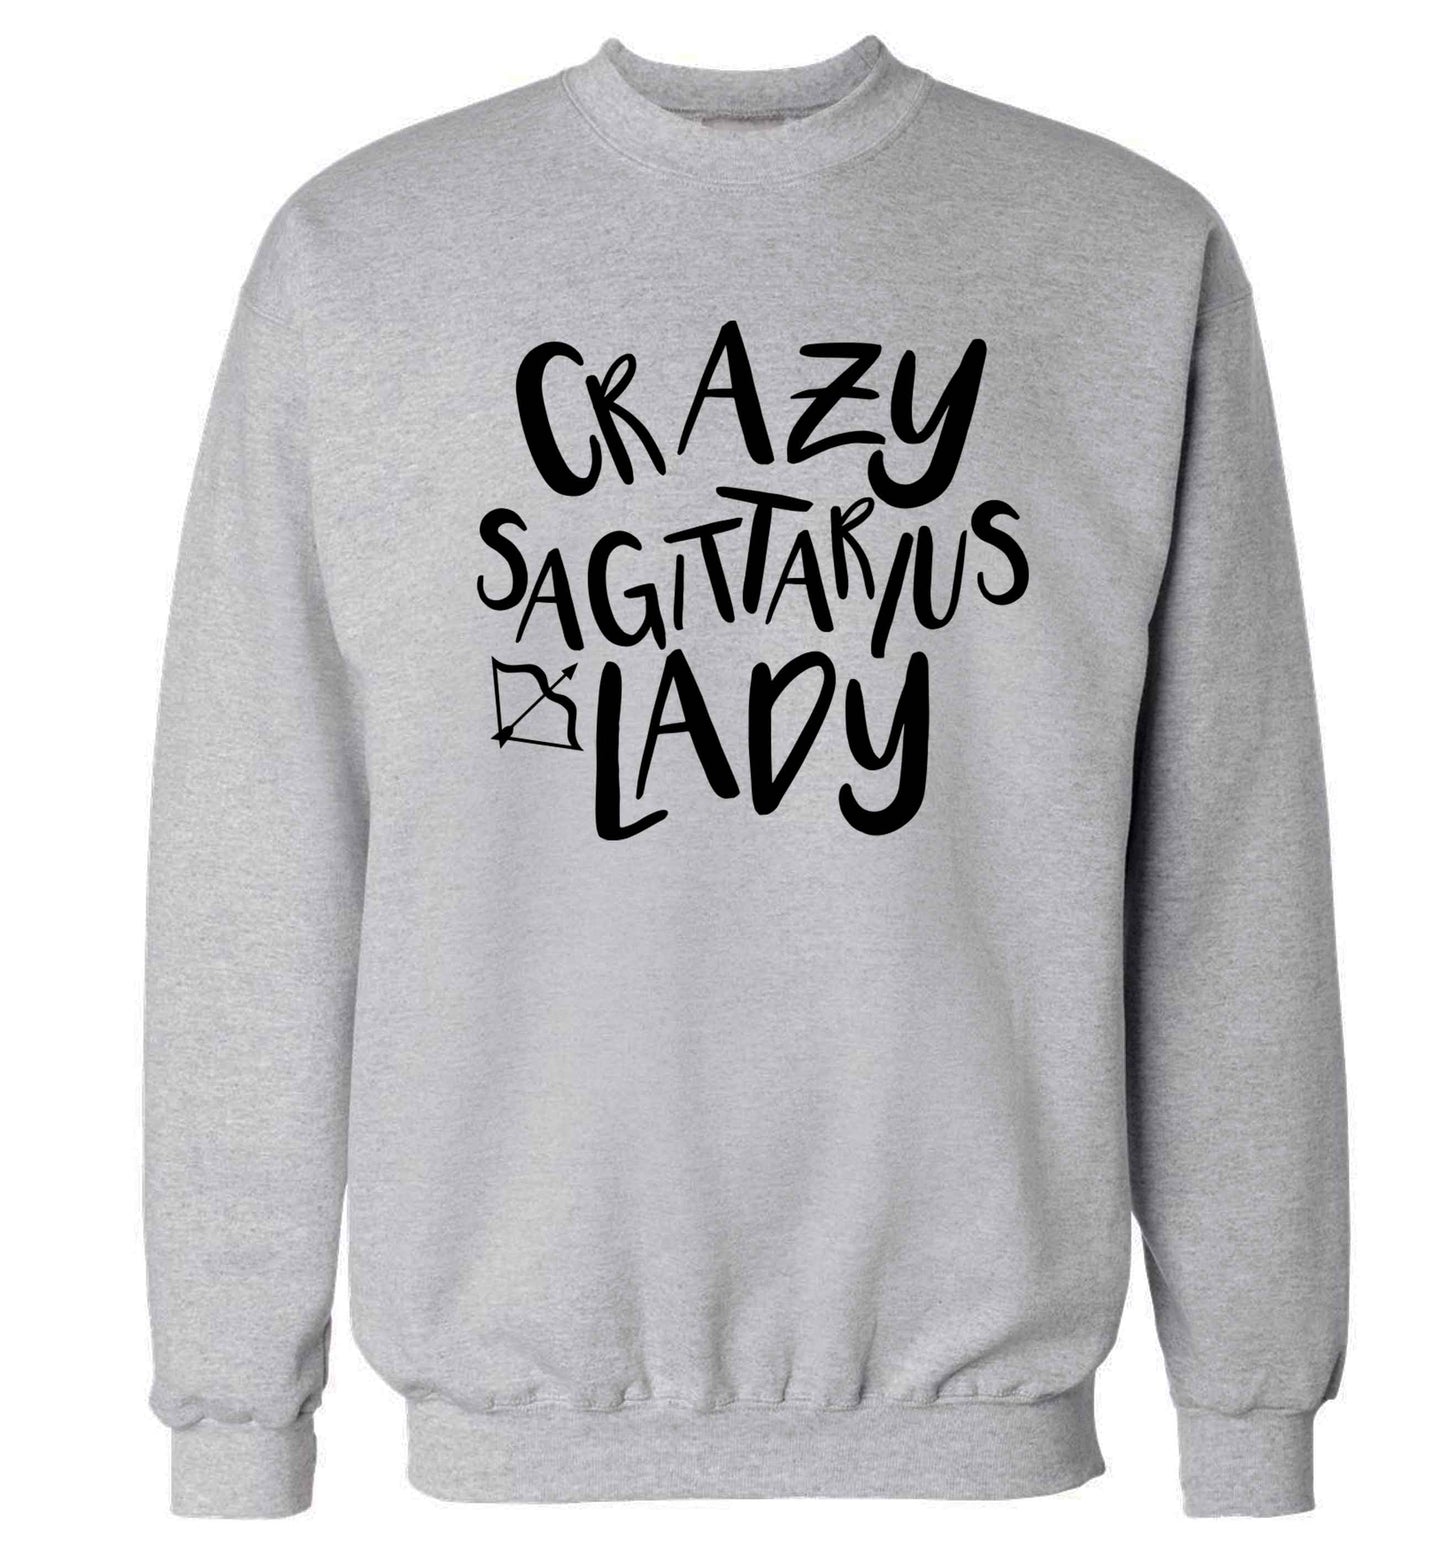 Crazy sagittarius lady Adult's unisex grey Sweater 2XL